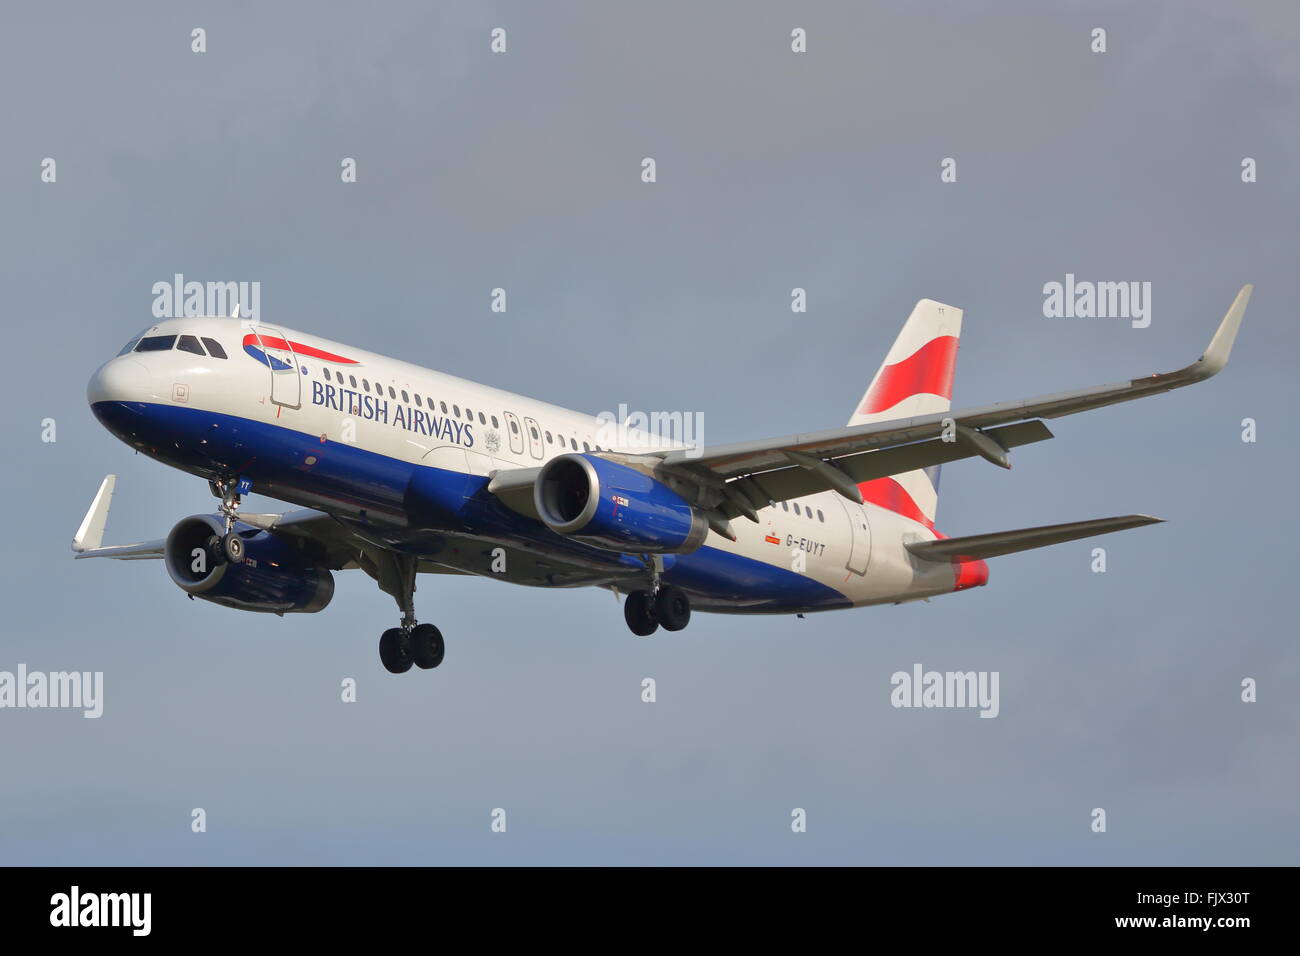 British Airways Airbus A320-200 G-EUYT Landung in Heathrow Stockfoto